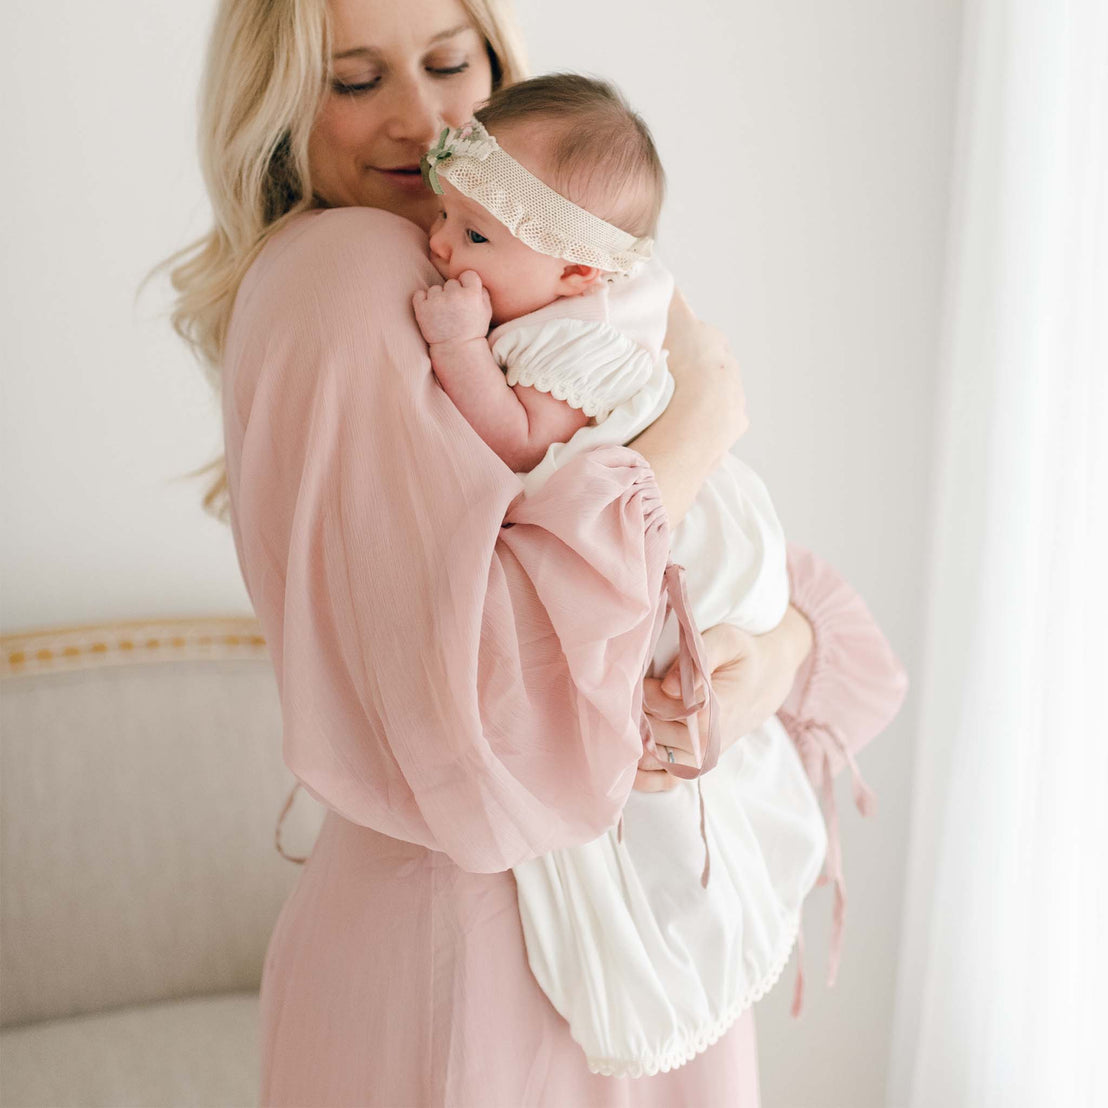 Mom hugging baby in Natalie gown